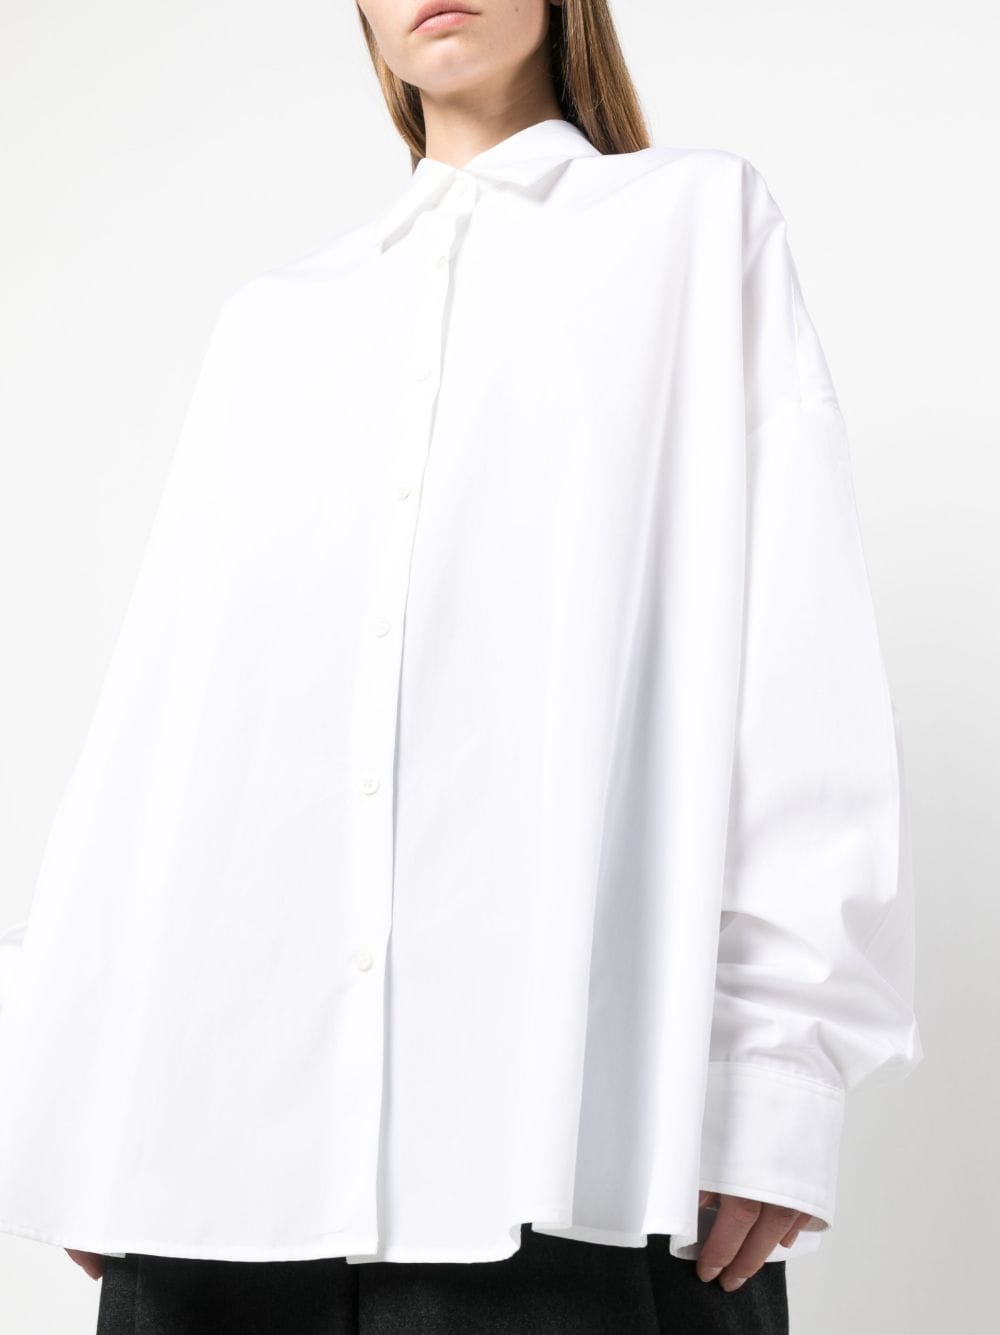 casia women - NOTEN - VAN DRIES shirt long-sleeved White